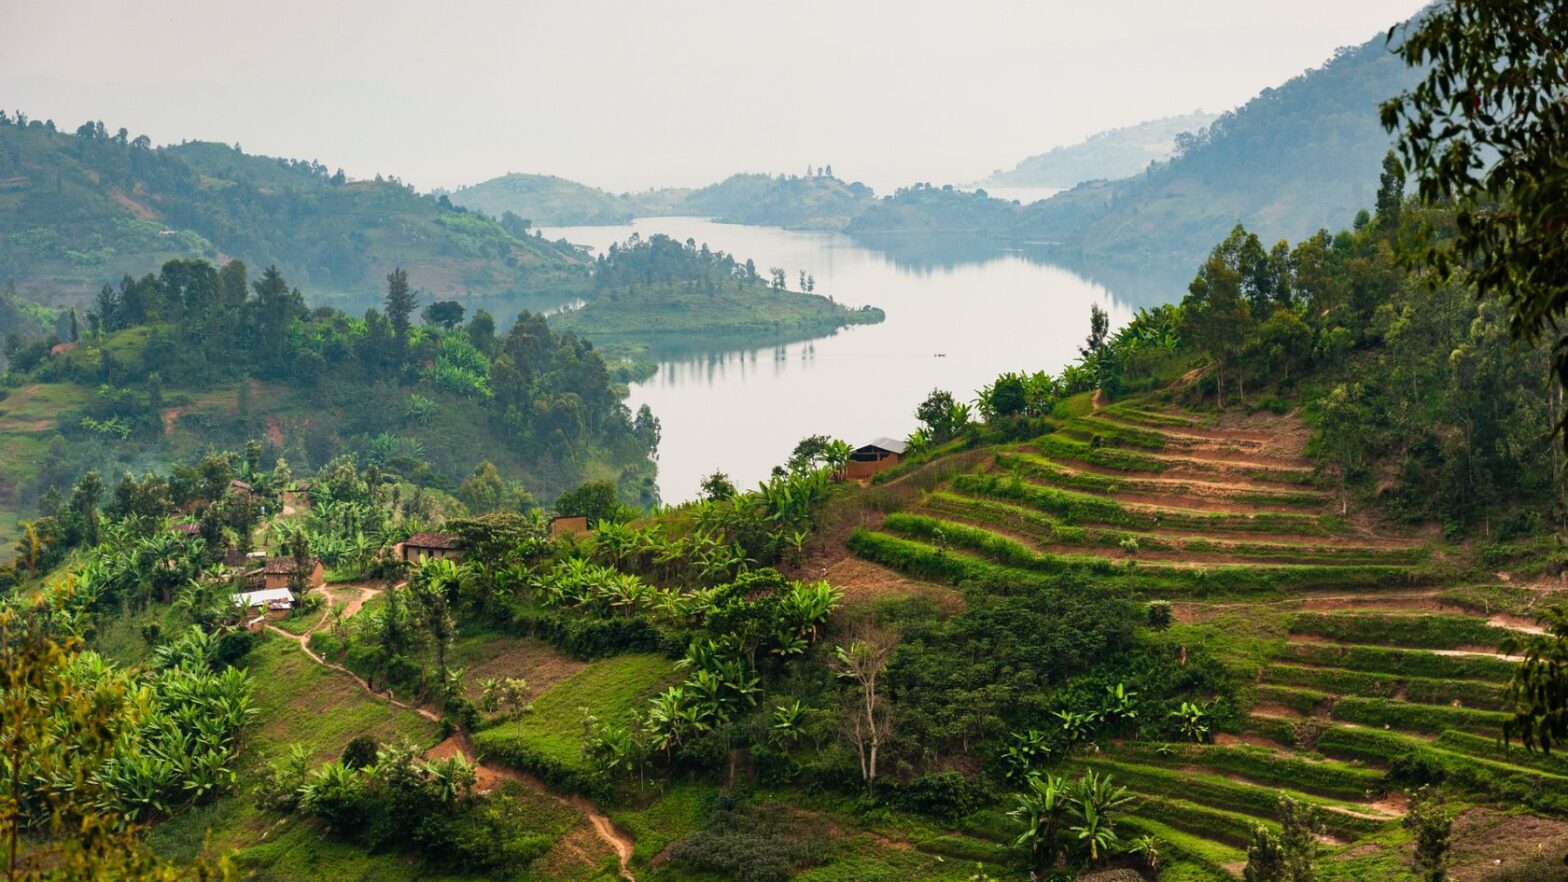 Farmland on steep hillside near Lake Kivu, Rwanda